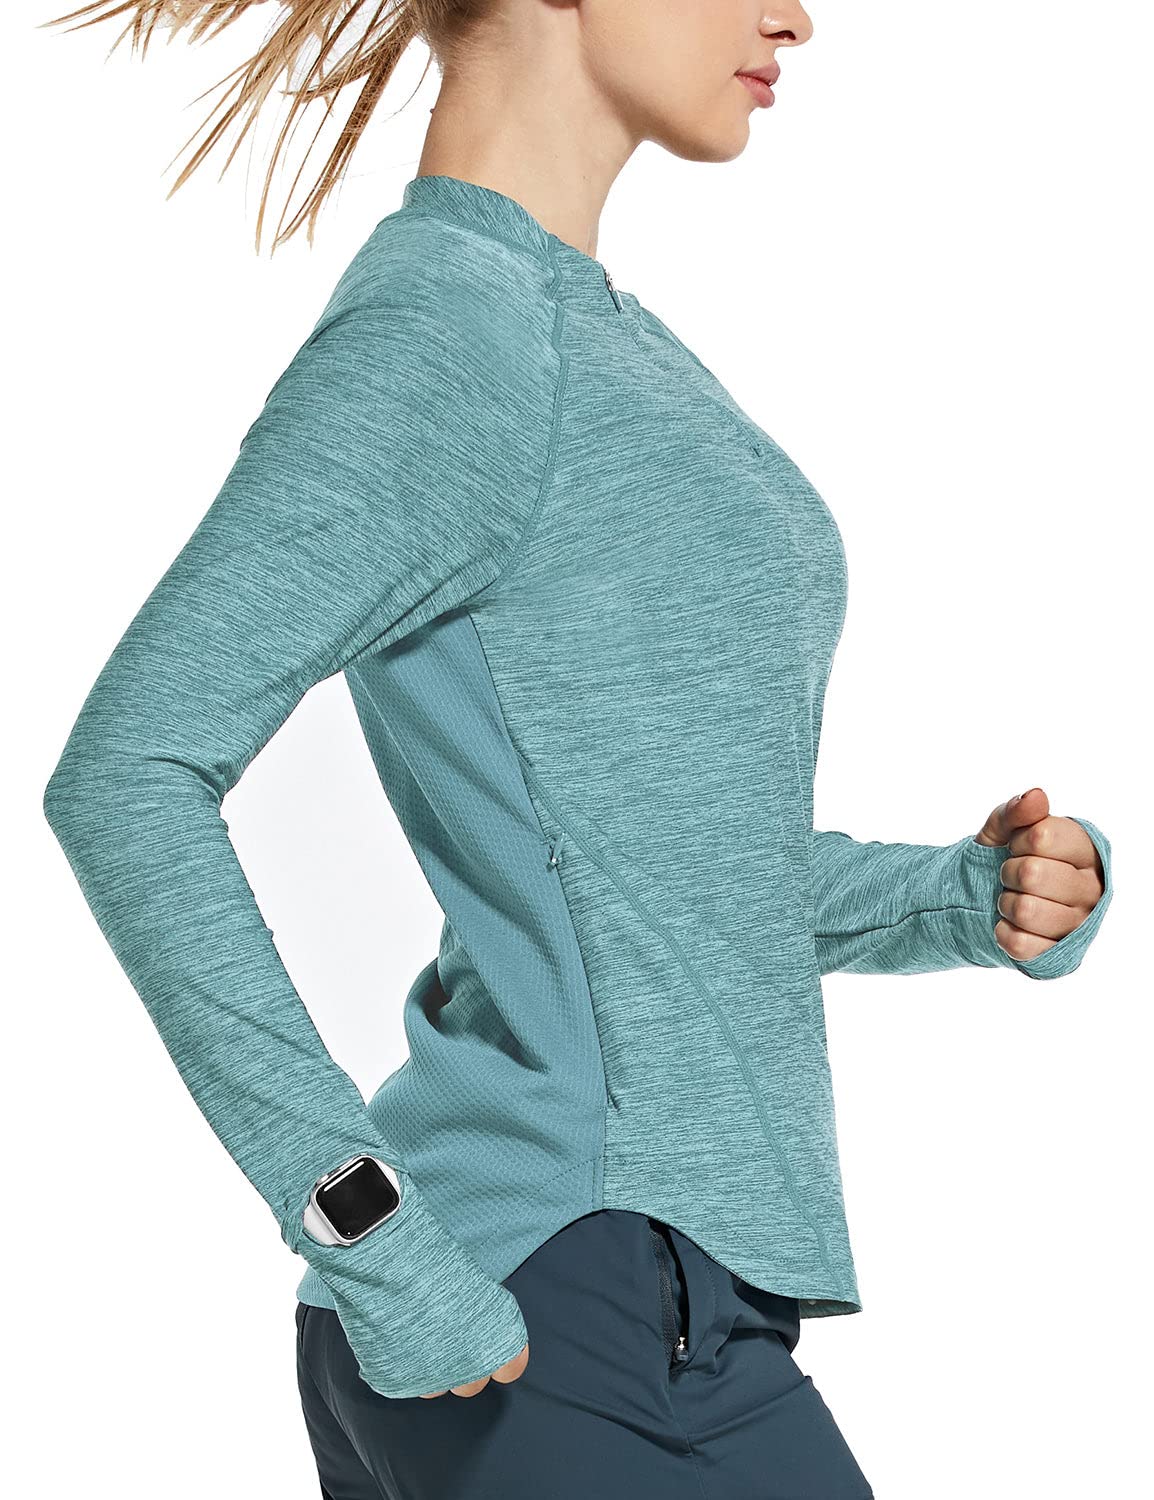 BALEAF Women's Quick Dry Shirts Long Sleeve for Running Hiking